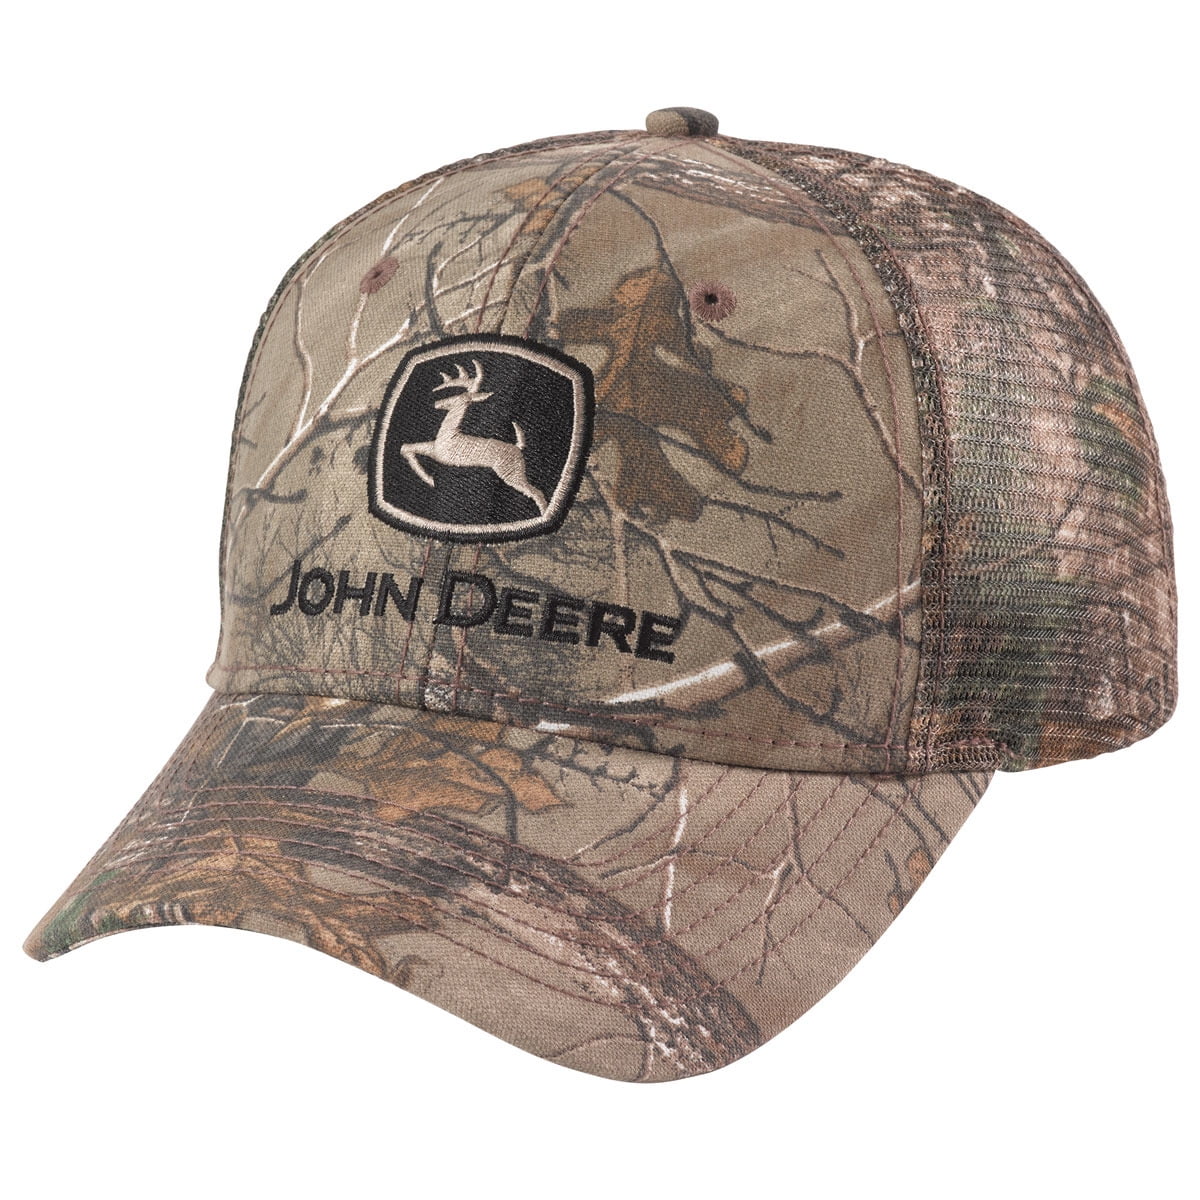 John Deere Full Camo Hat/Cap - LP73683